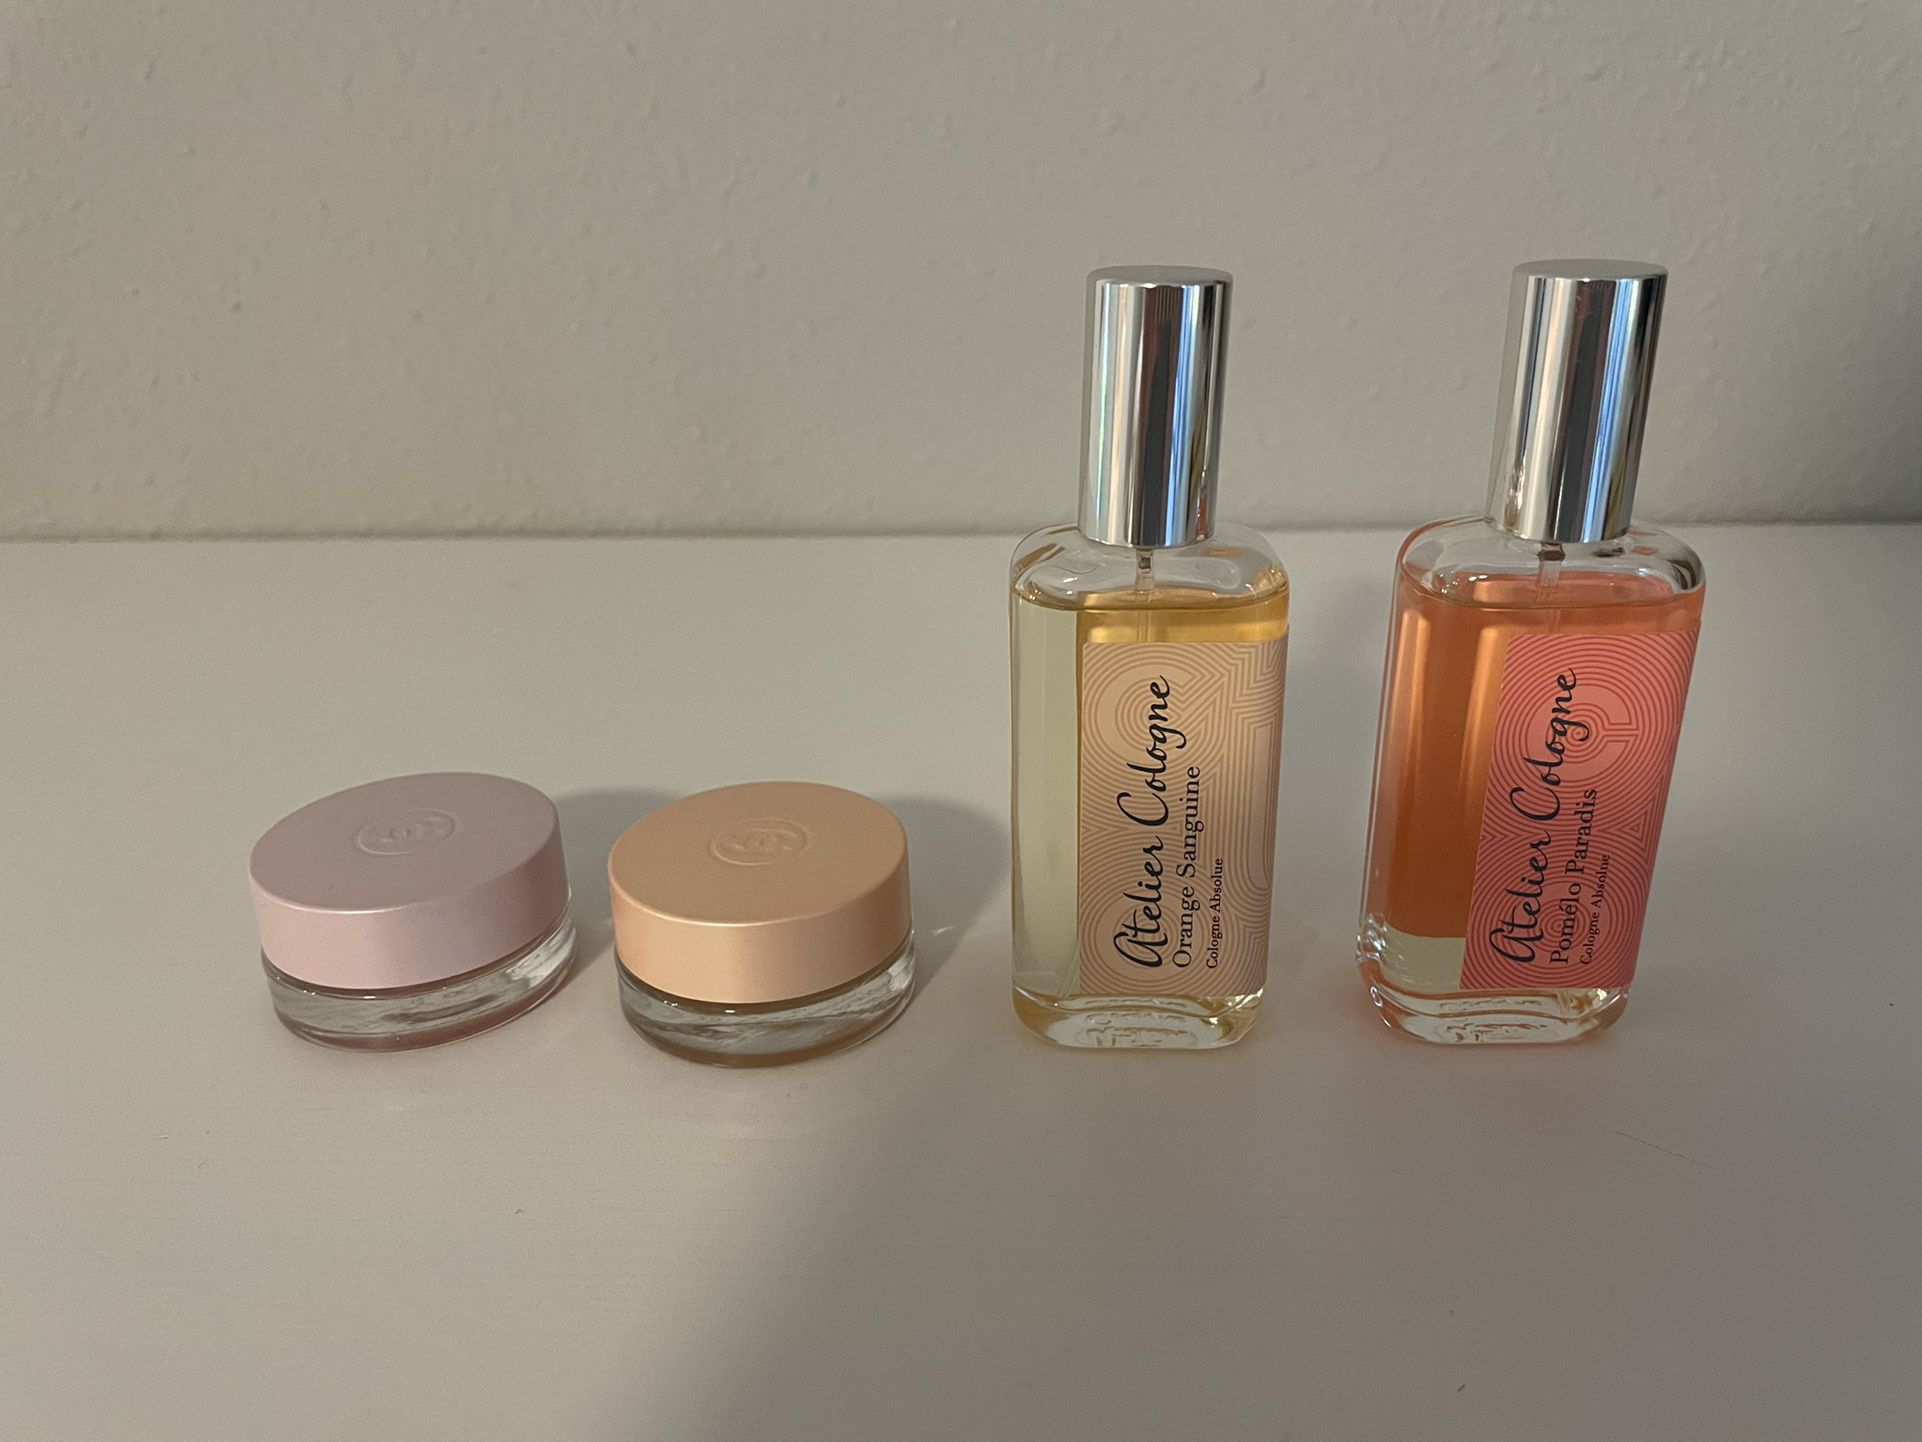 Luxury Perfumes - Chanel, Atelier Cologne (Price In Description)